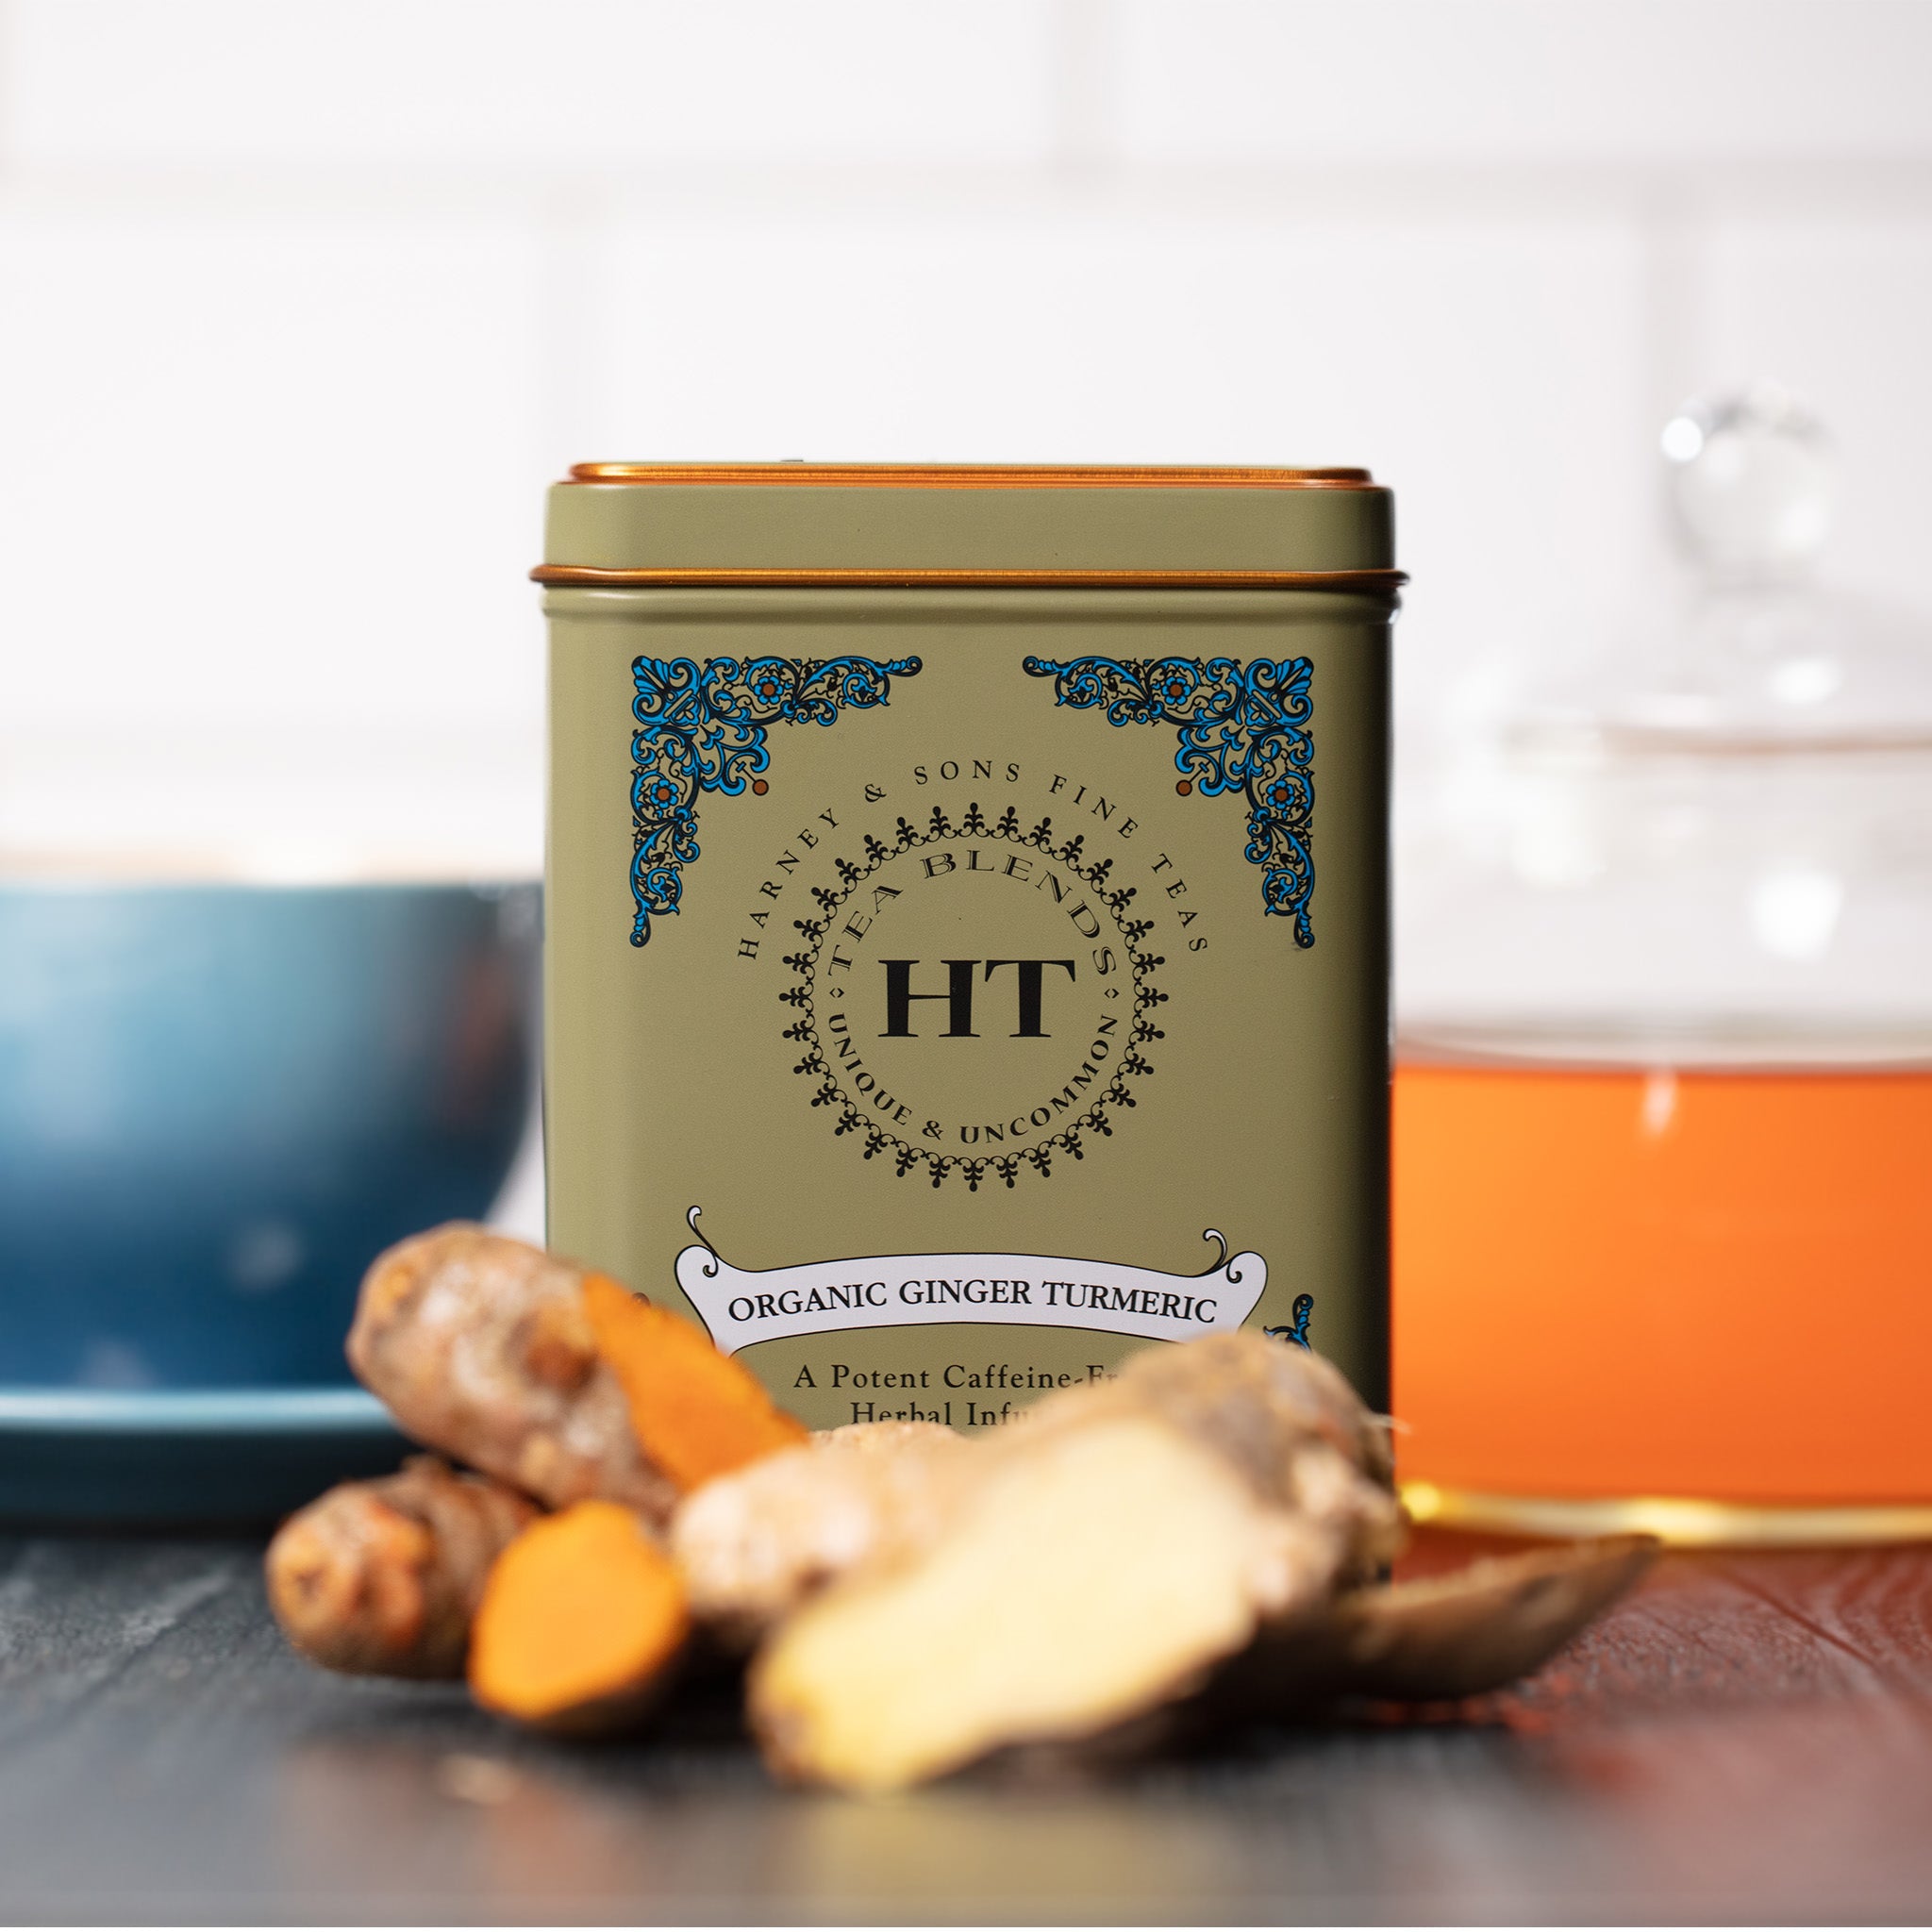 Organic Ginger Turmeric, HT Tin of 20 Sachets -   - Harney & Sons Fine Teas